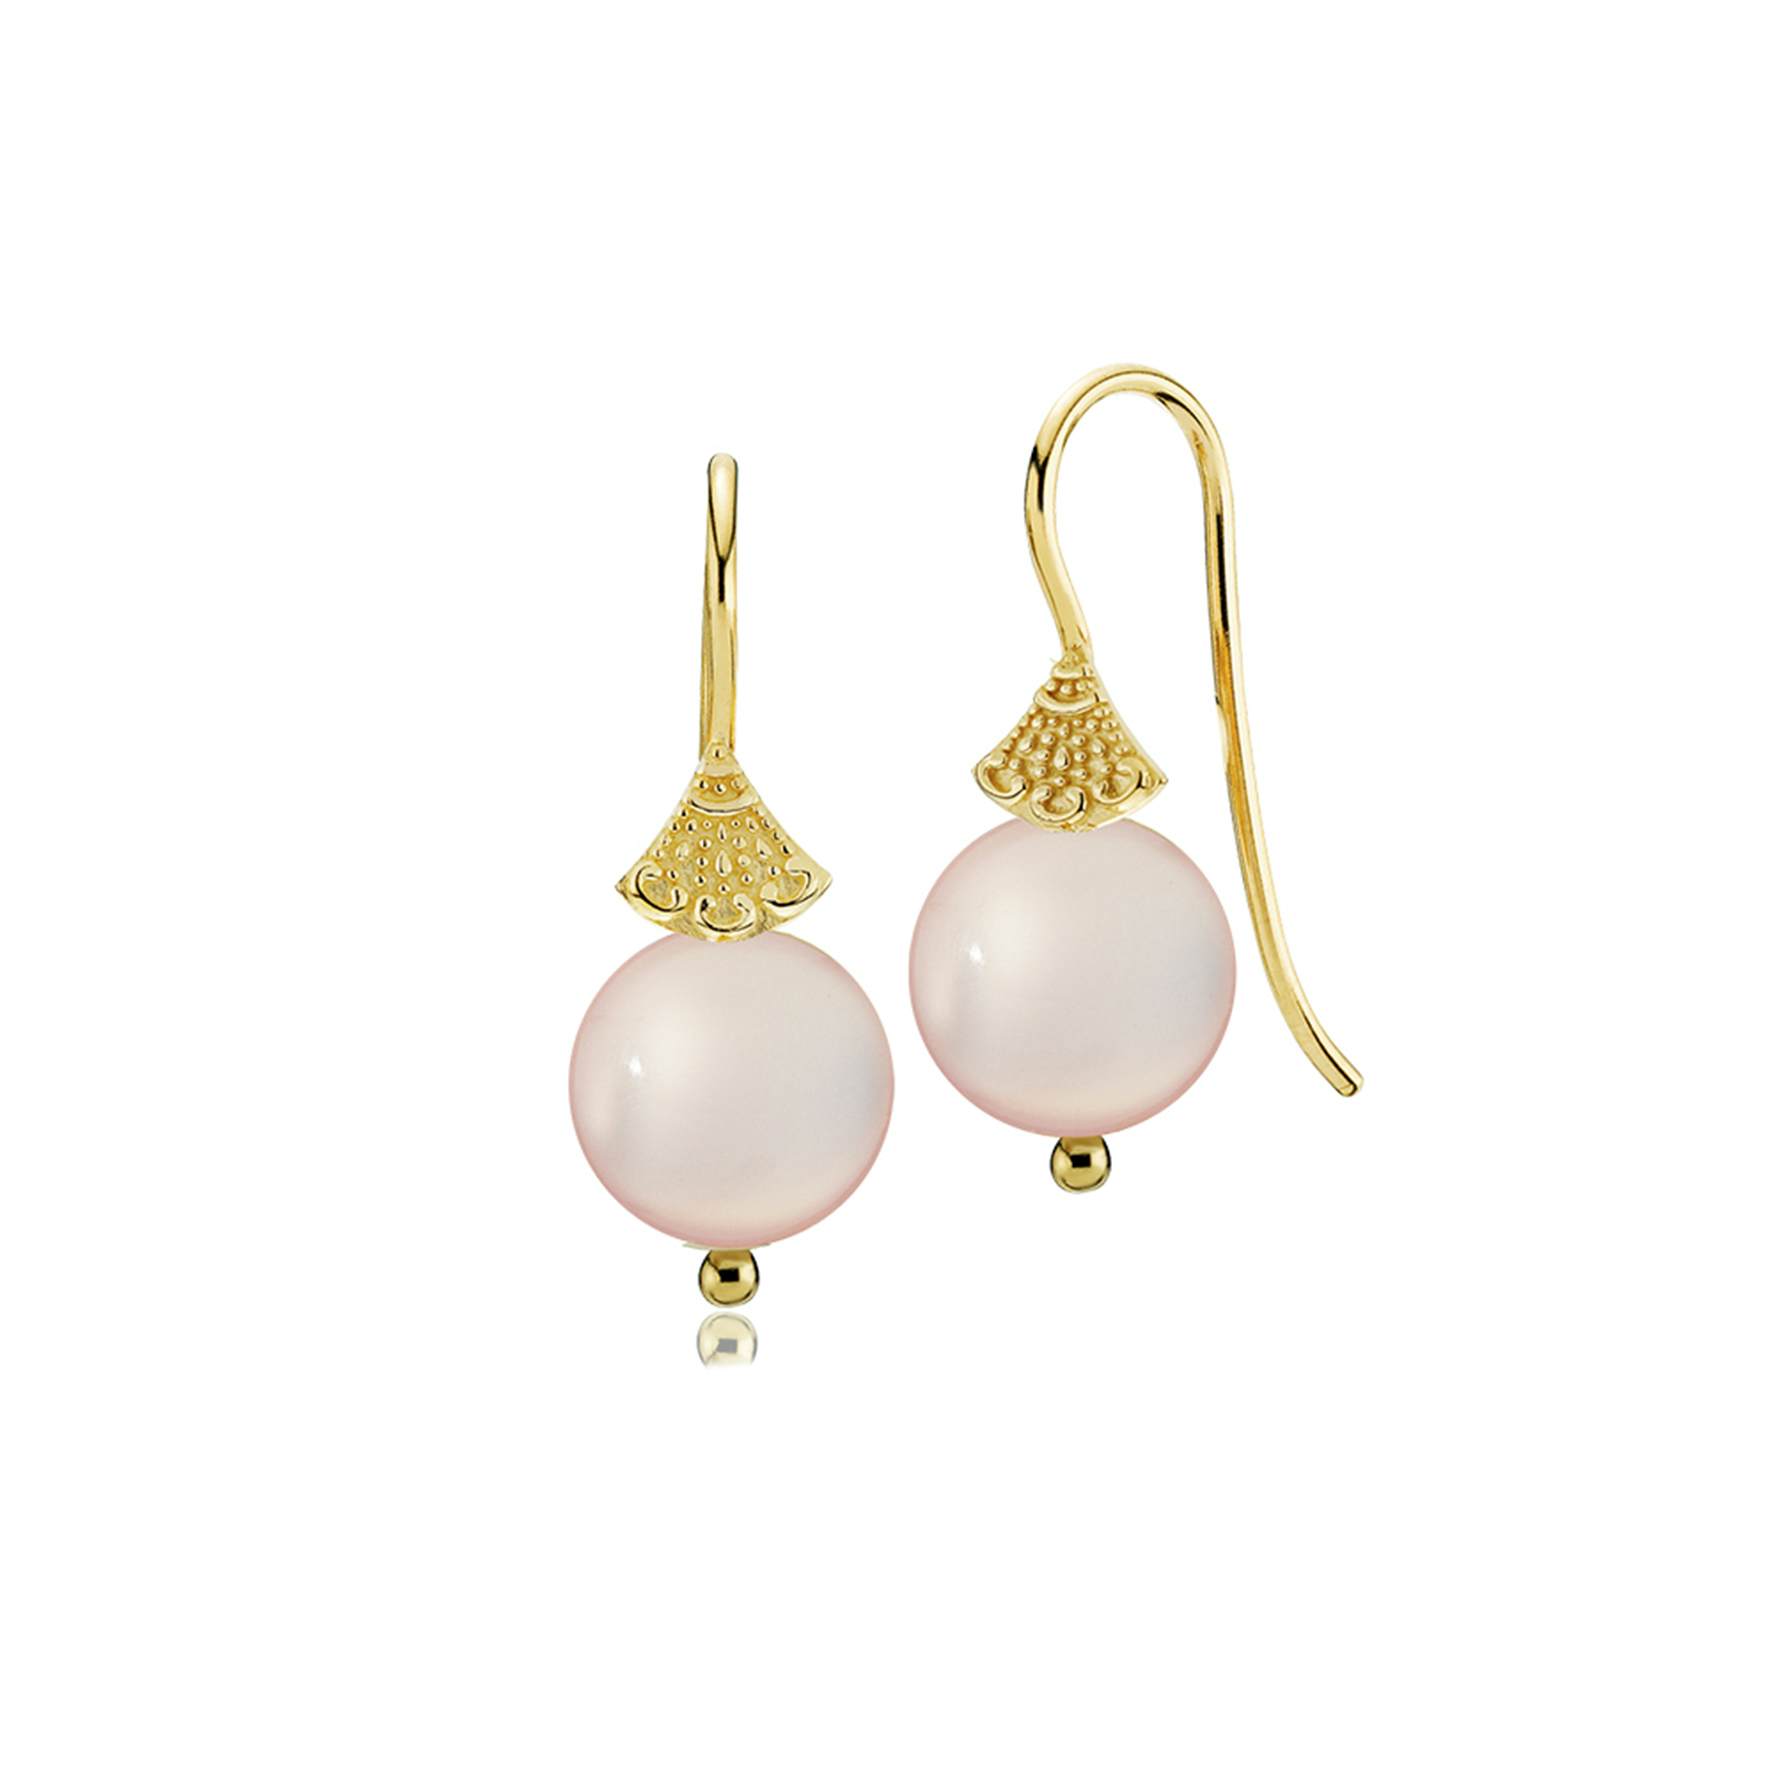 Bohemian Earrings Small Pink von Izabel Camille in Vergoldet-Silber Sterling 925|Pink